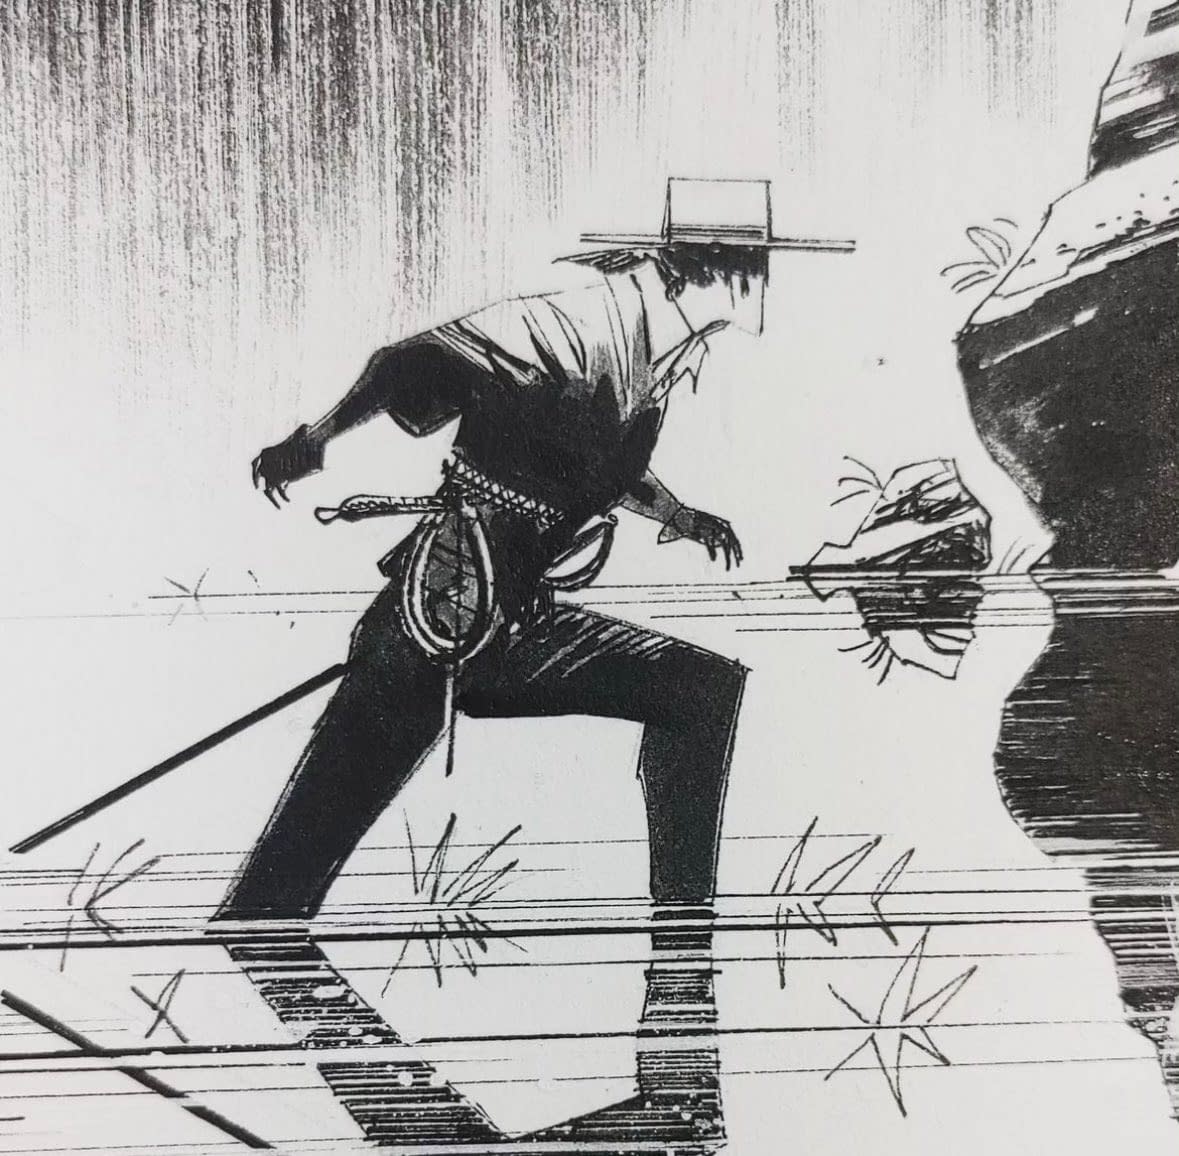 Sean Gordon Murphy's Zorro: Man Of The Dead Graphic Novel by Massive  Publishing — Kickstarter